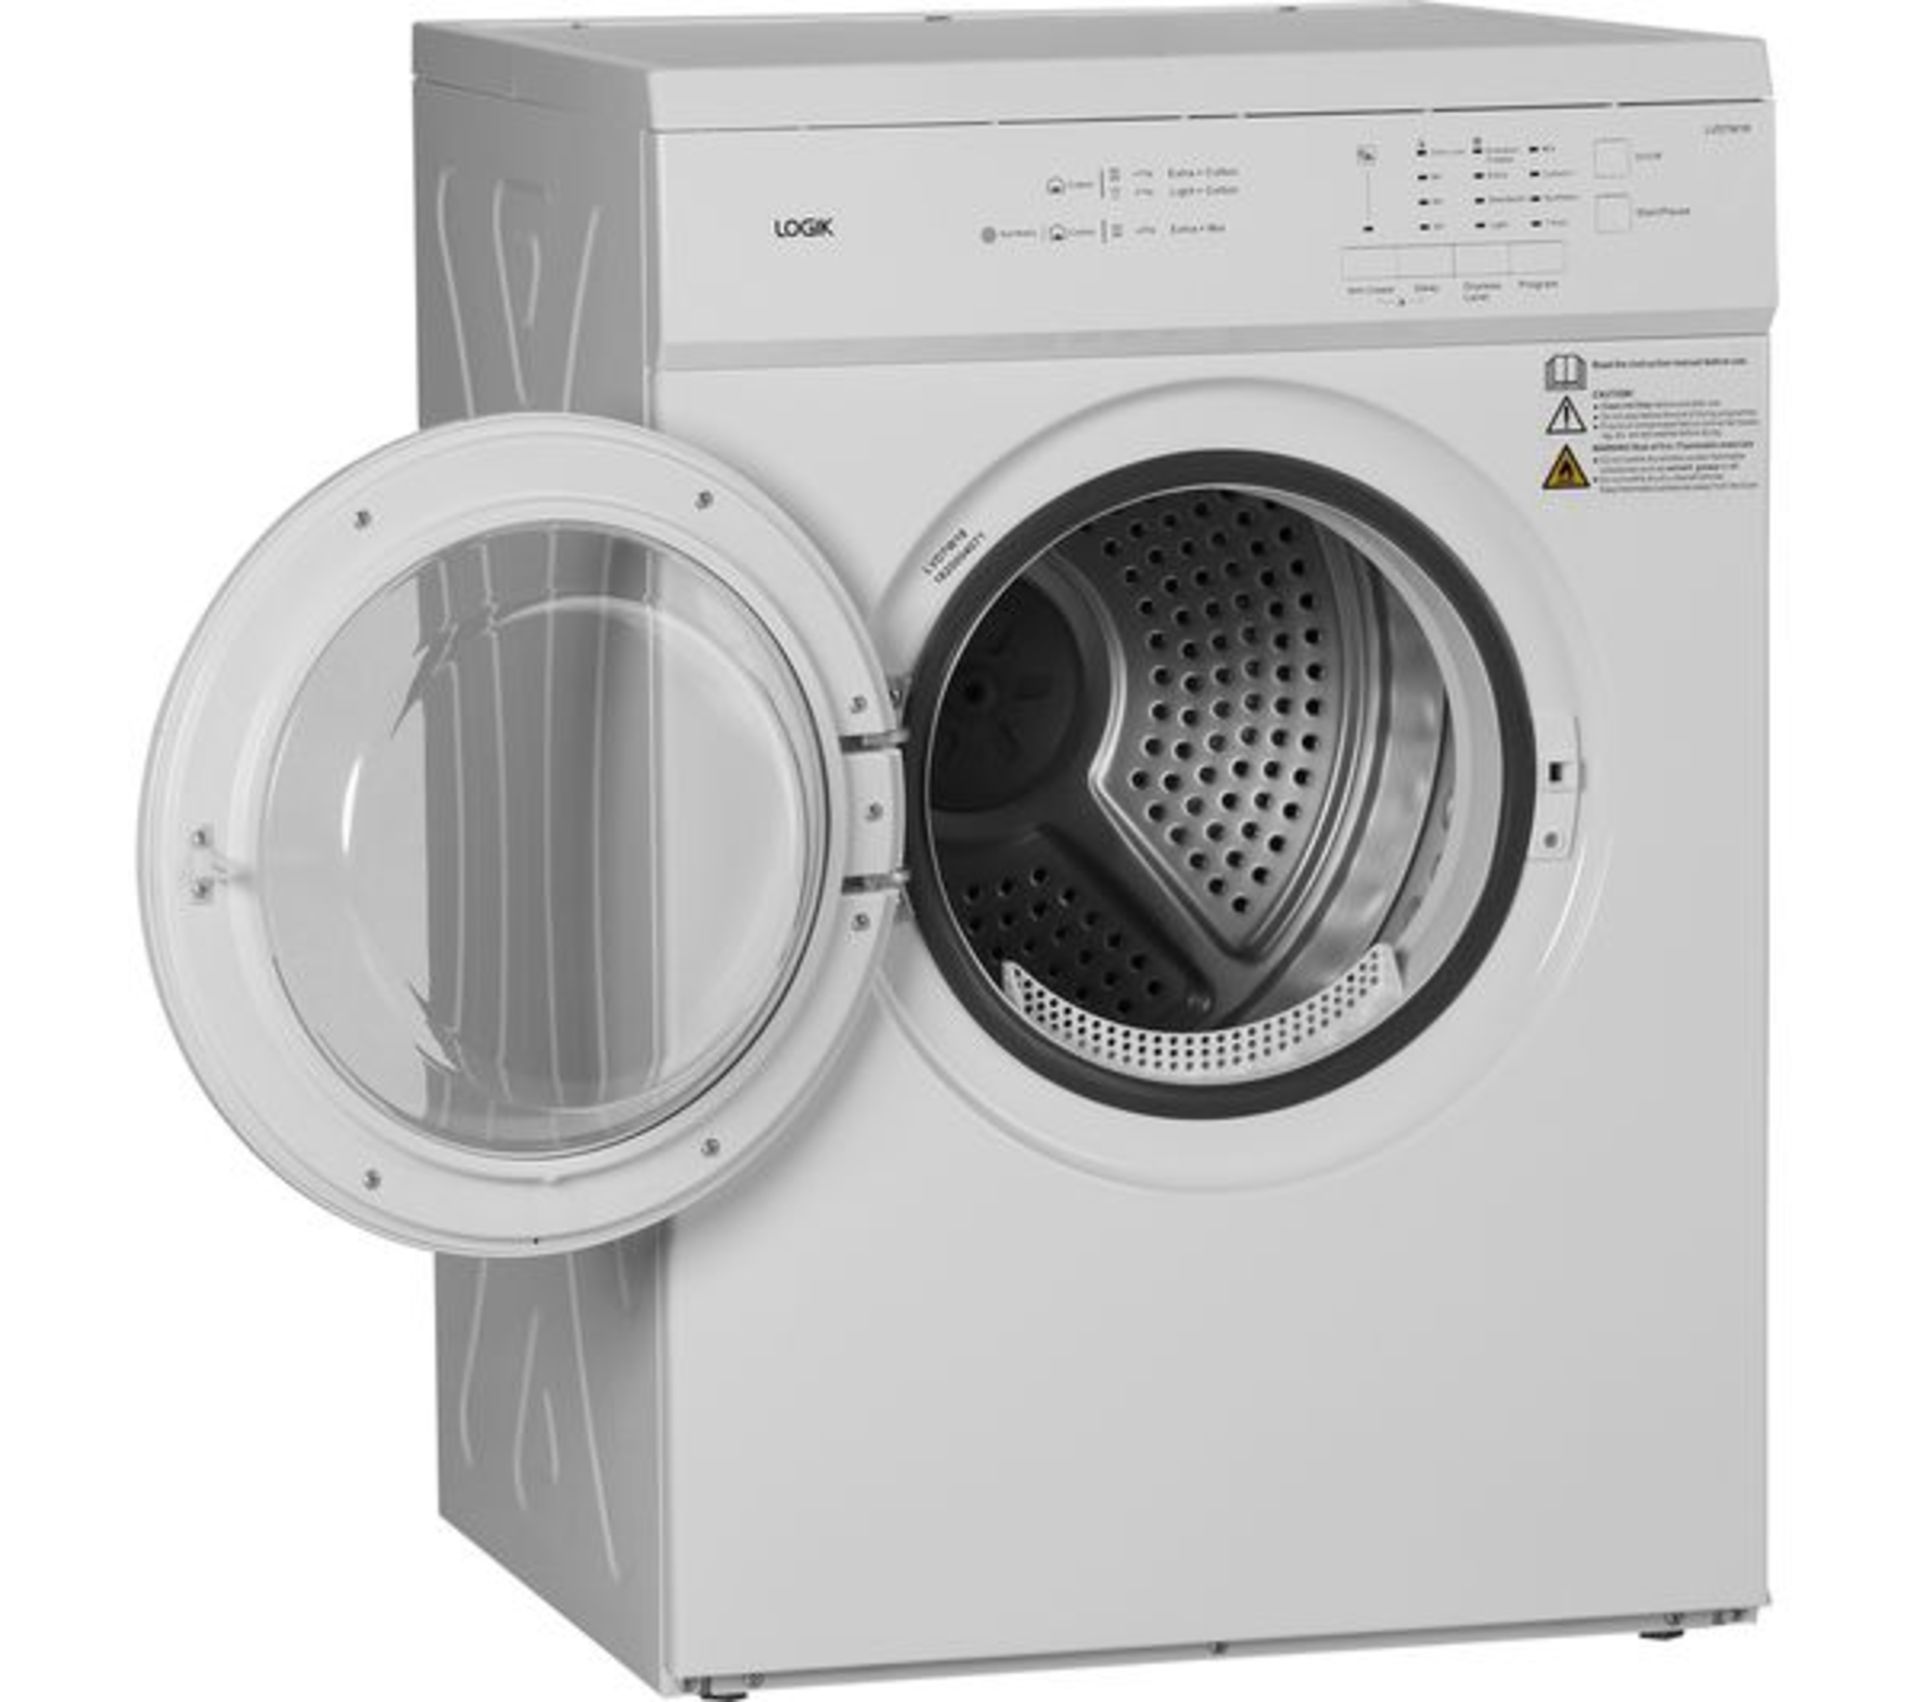 Pallet of Mixed LOGIK Laundry White Goods. Latest selling price £739.96* - Image 4 of 7